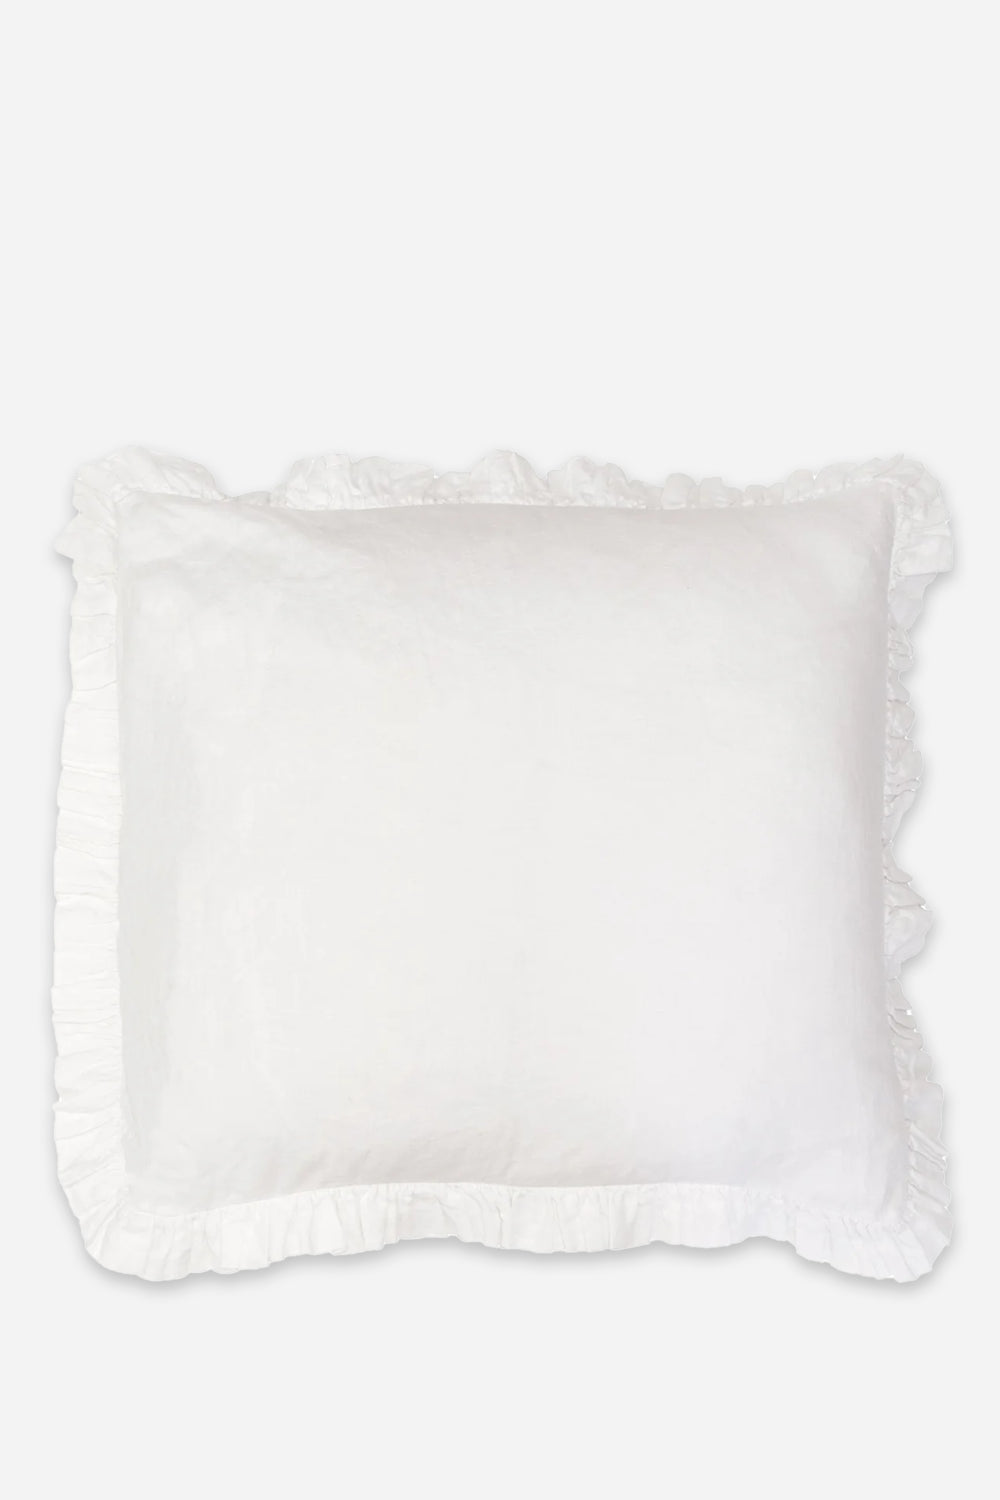 Olivia Ruffle Cushion / White - Domestic Science Home